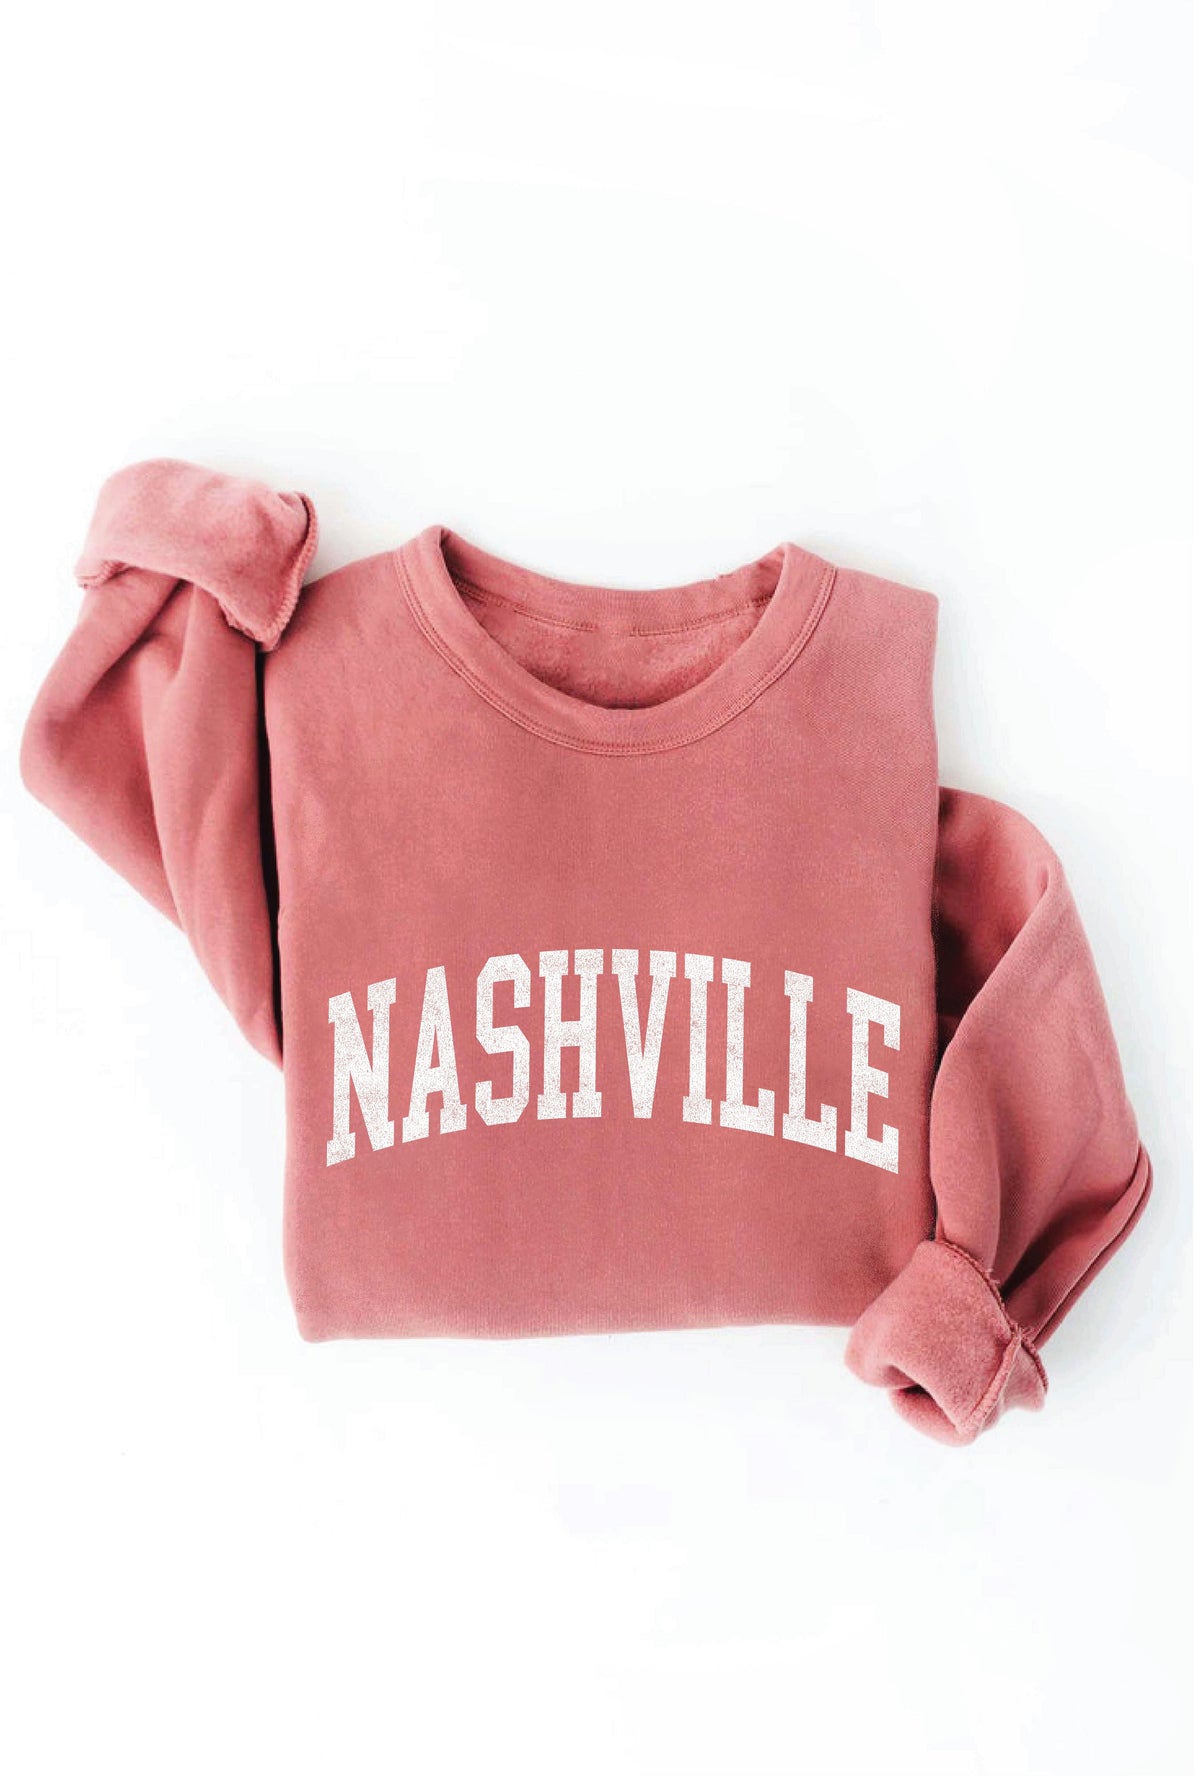 Nashville Super Soft Graphic Sweatshirt in Mauve